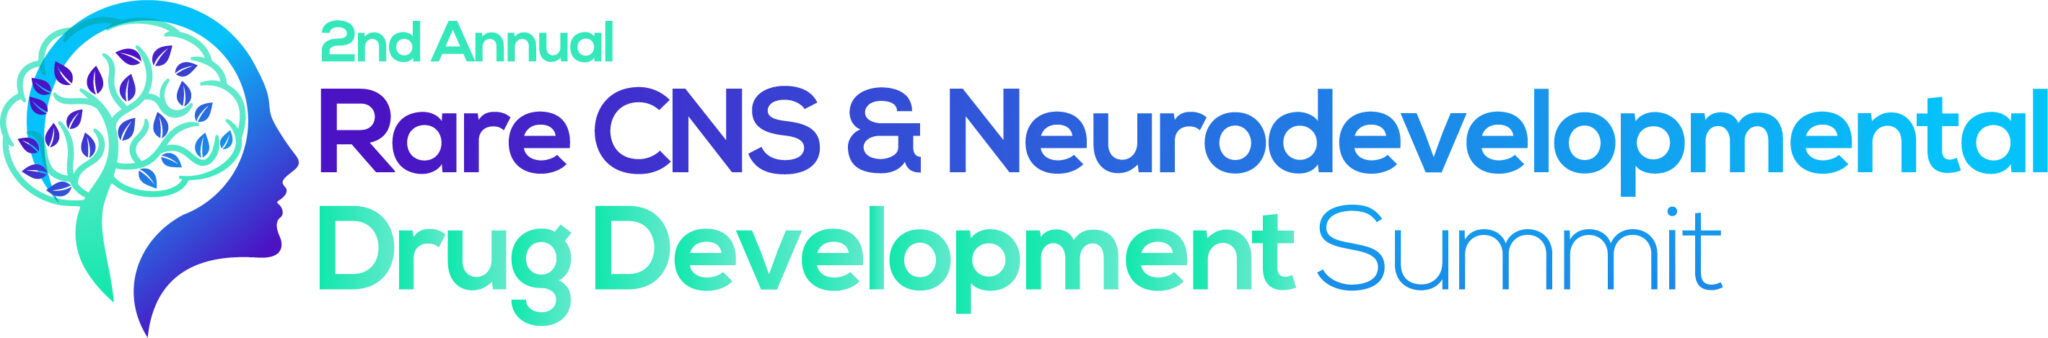 HW220717-26800-2nd-Rare-CNS-Neurodevelopmental-Drug-Development-Summit-logo-2048x338